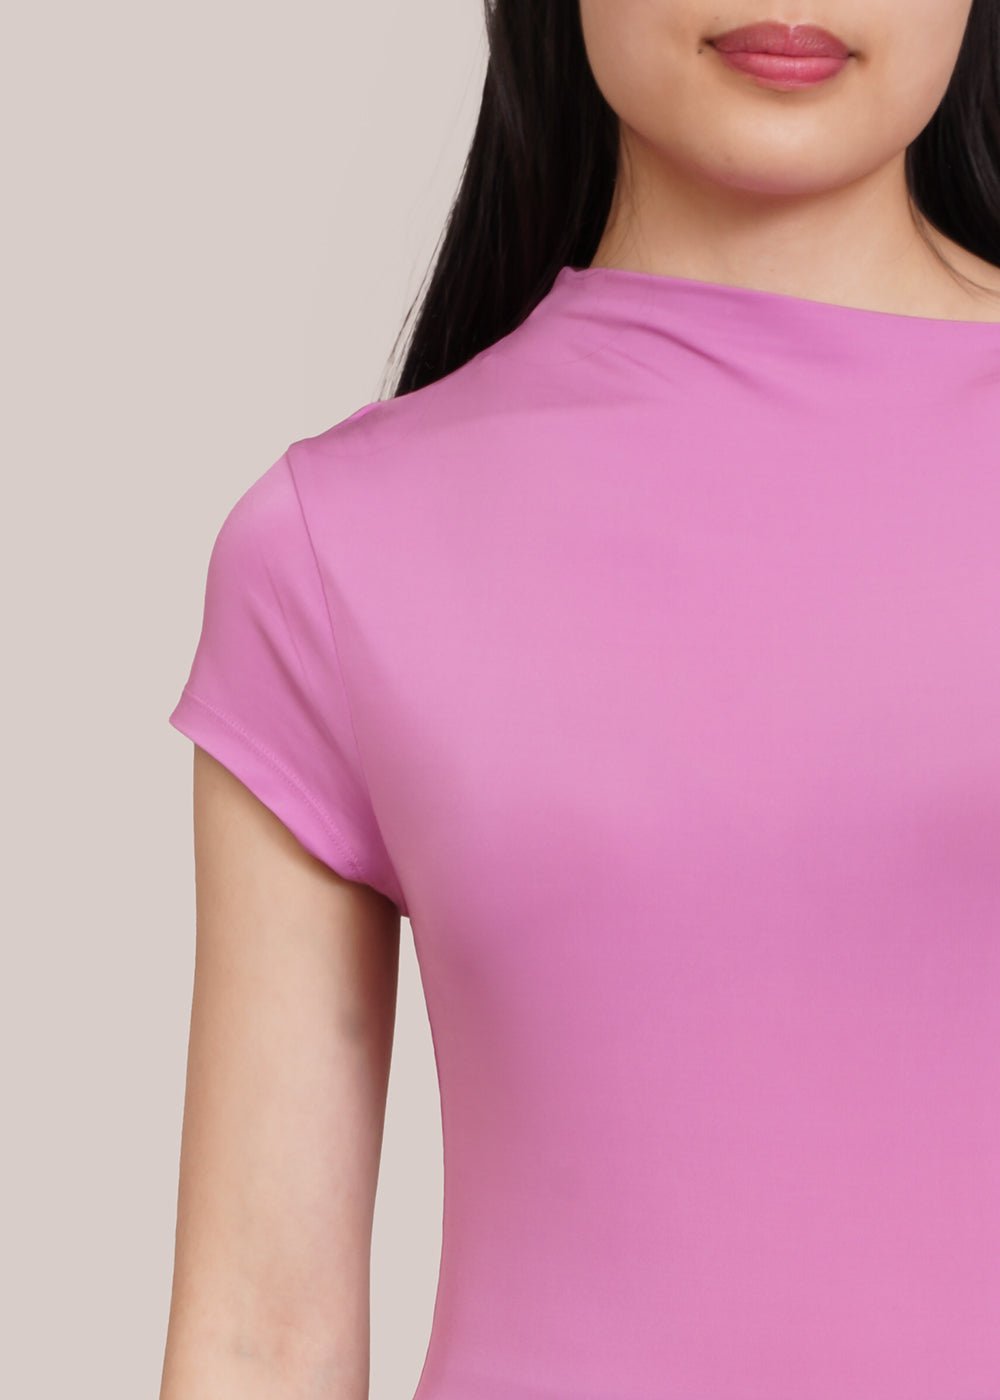 Paloma Wool Pink Hilton Shirt - New Classics Studios Sustainable Ethical Fashion Canada